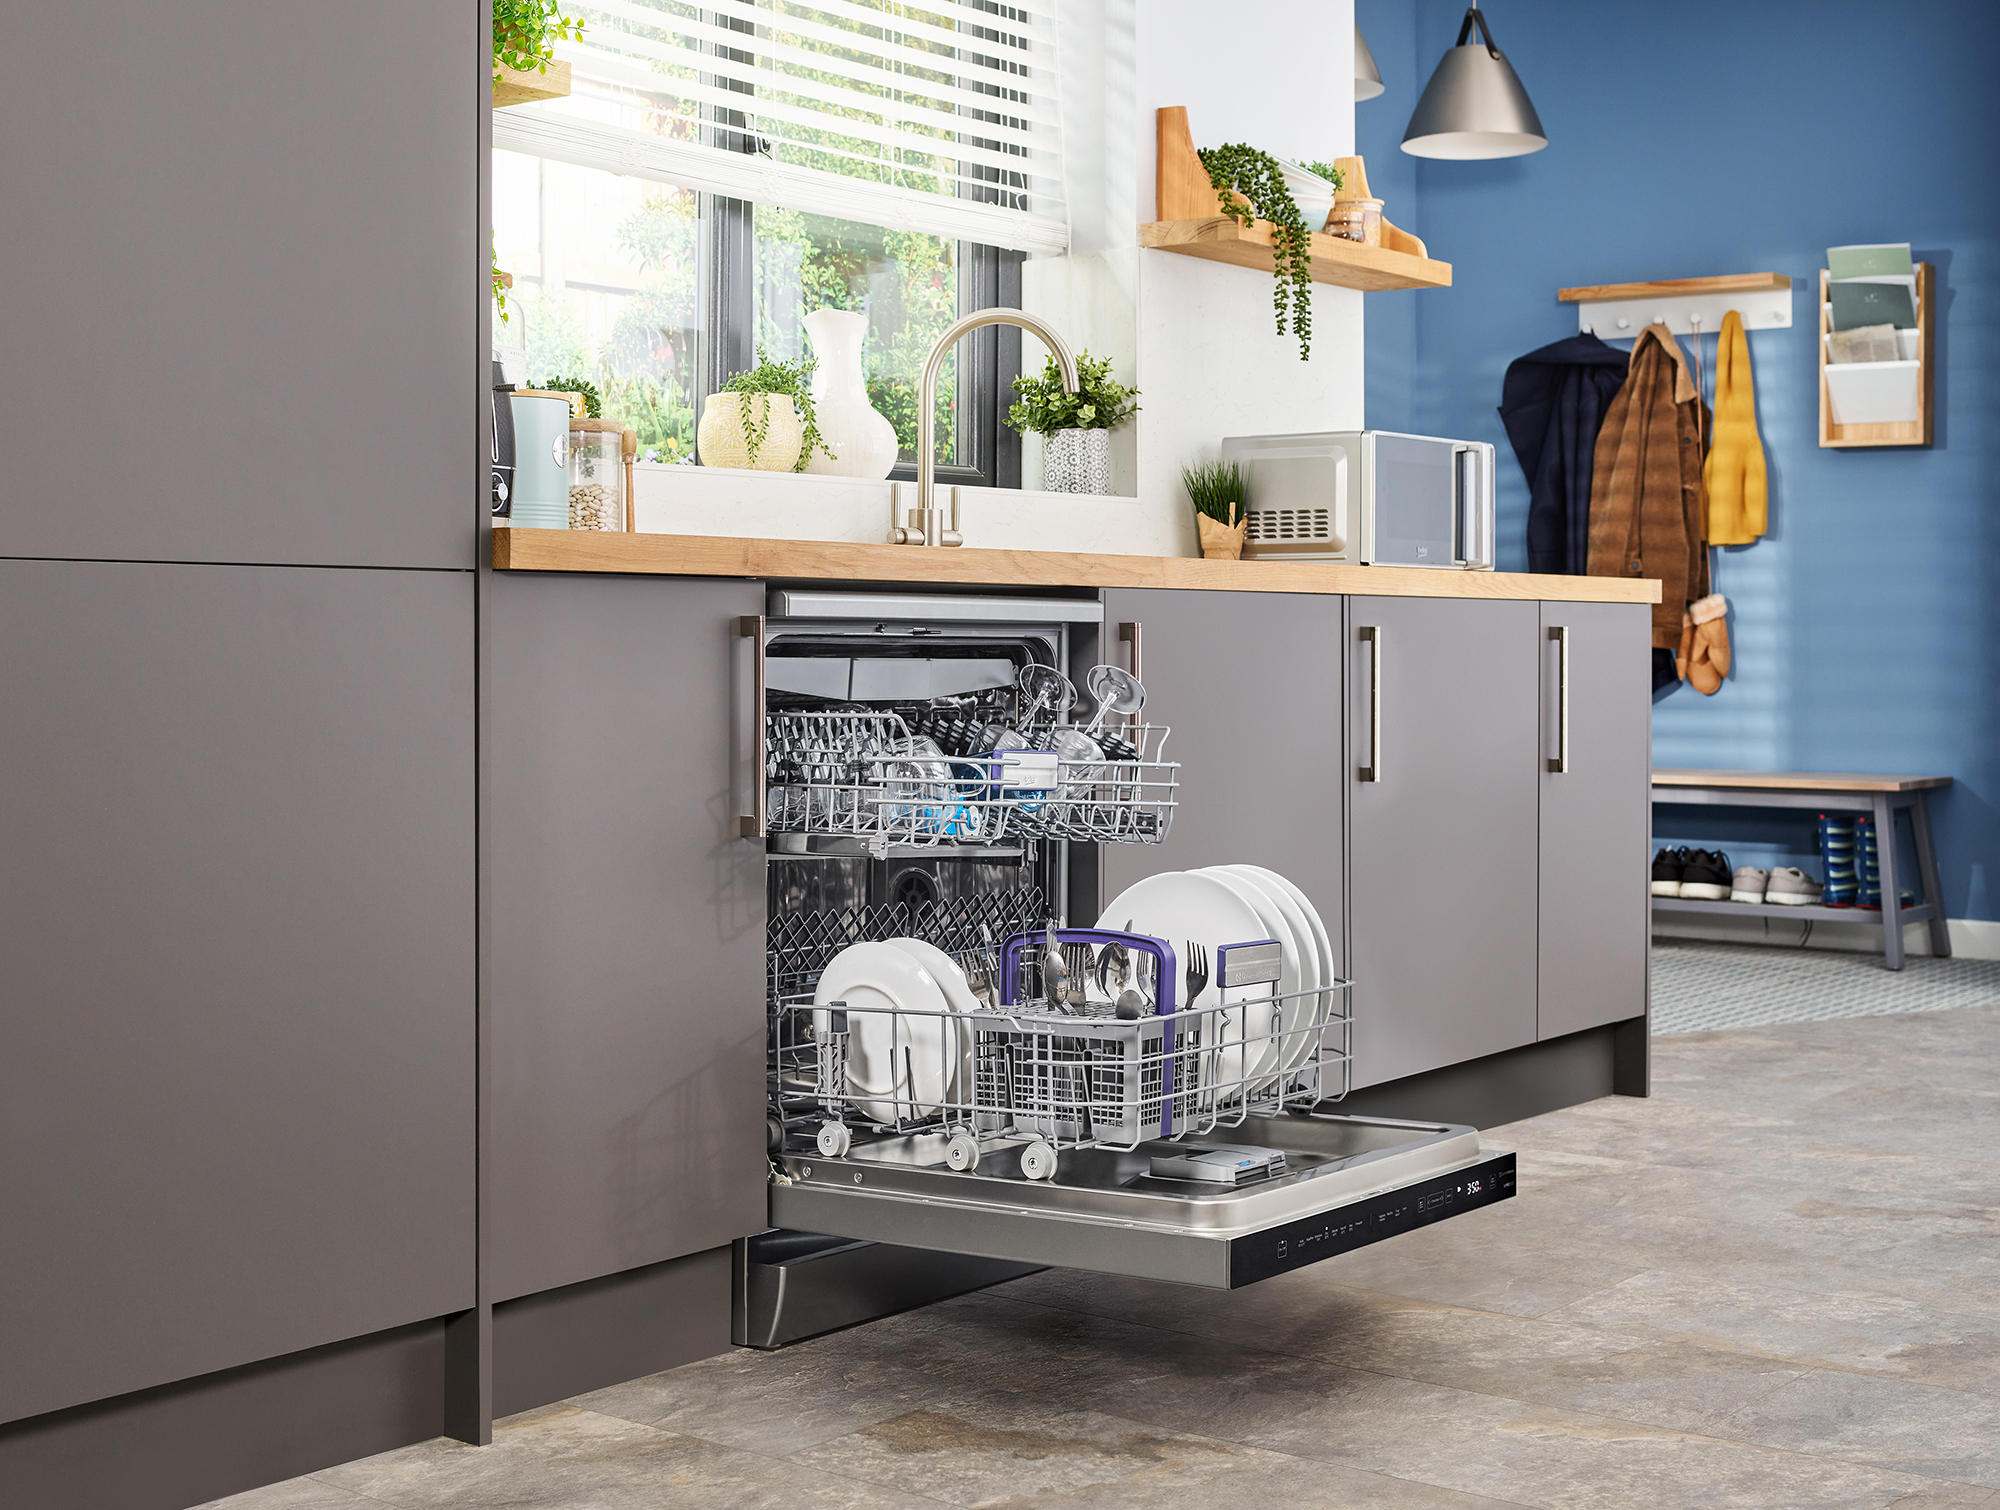 Beko’s rigorous stress-testing ensures appliances are built for modern living